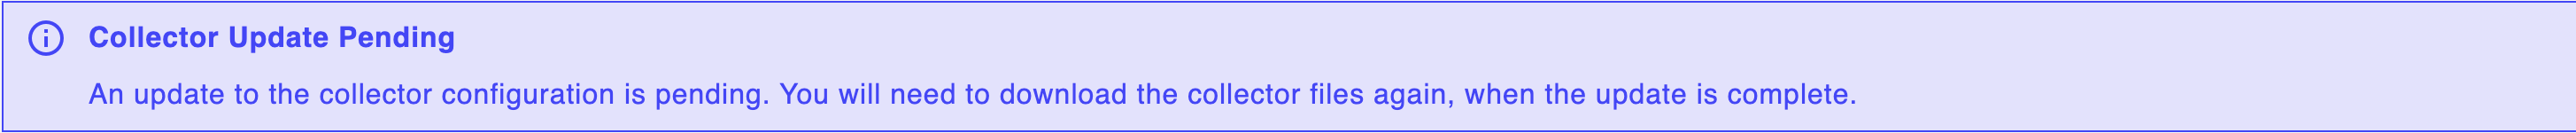 Edit Collector Configuration Pending